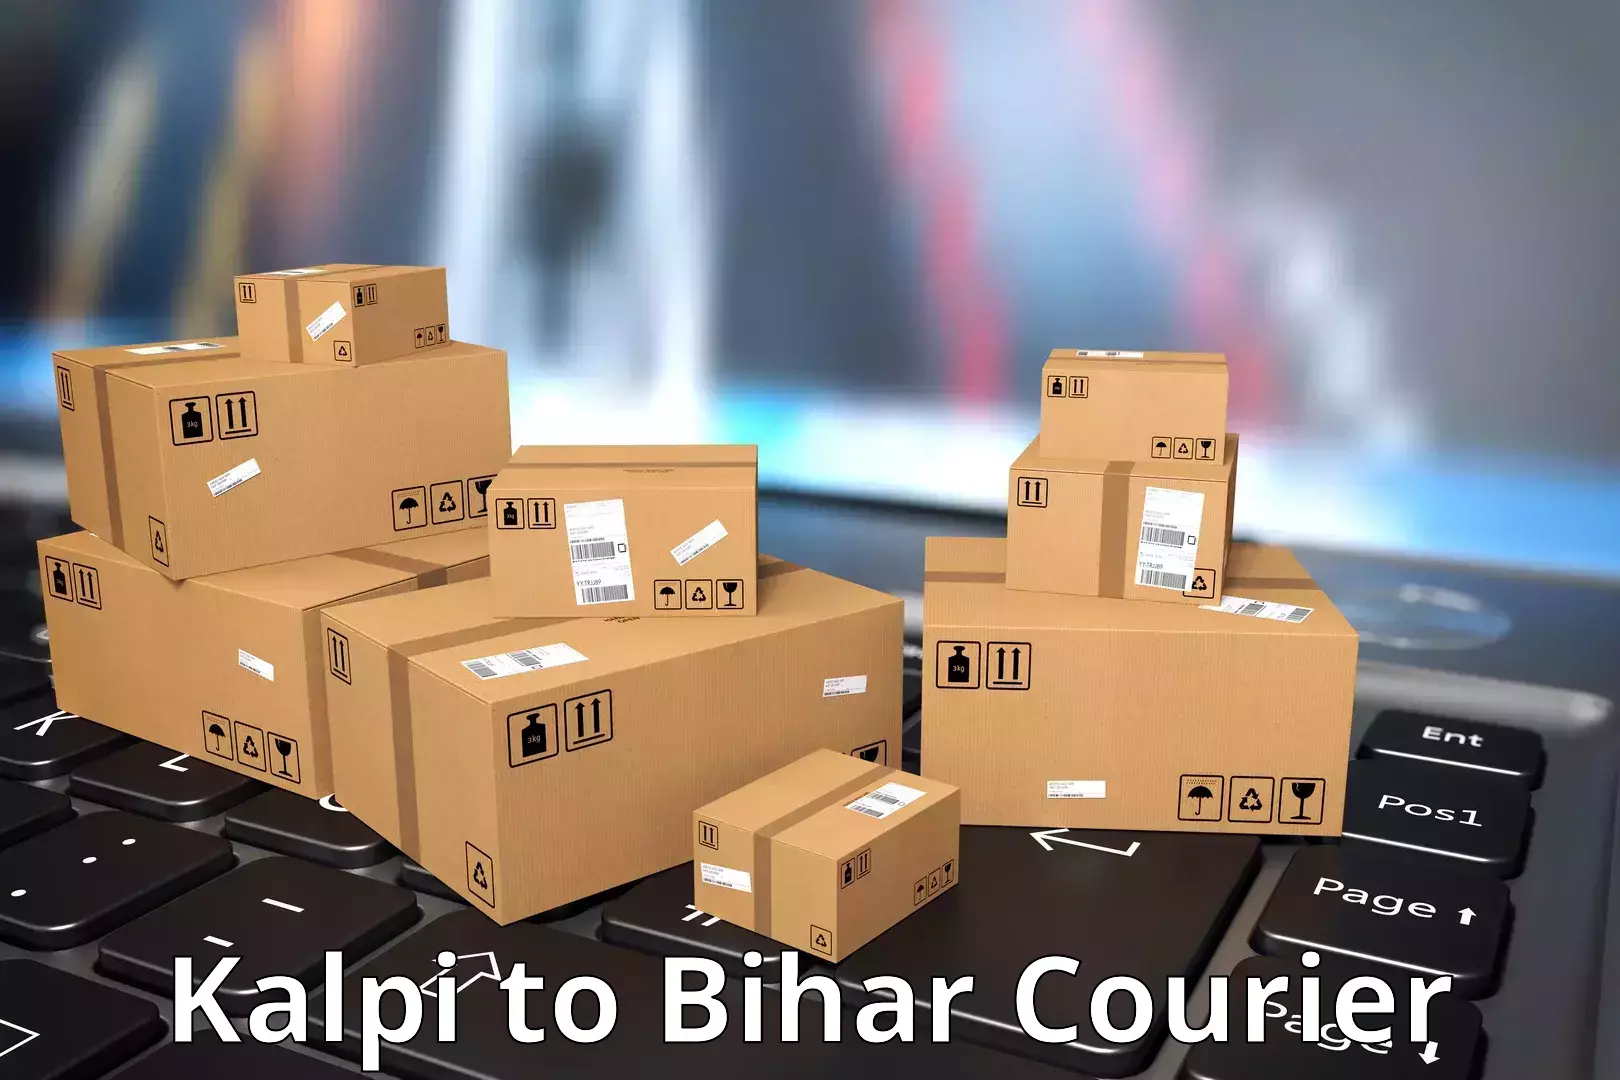 Courier service efficiency in Kalpi to Bihar